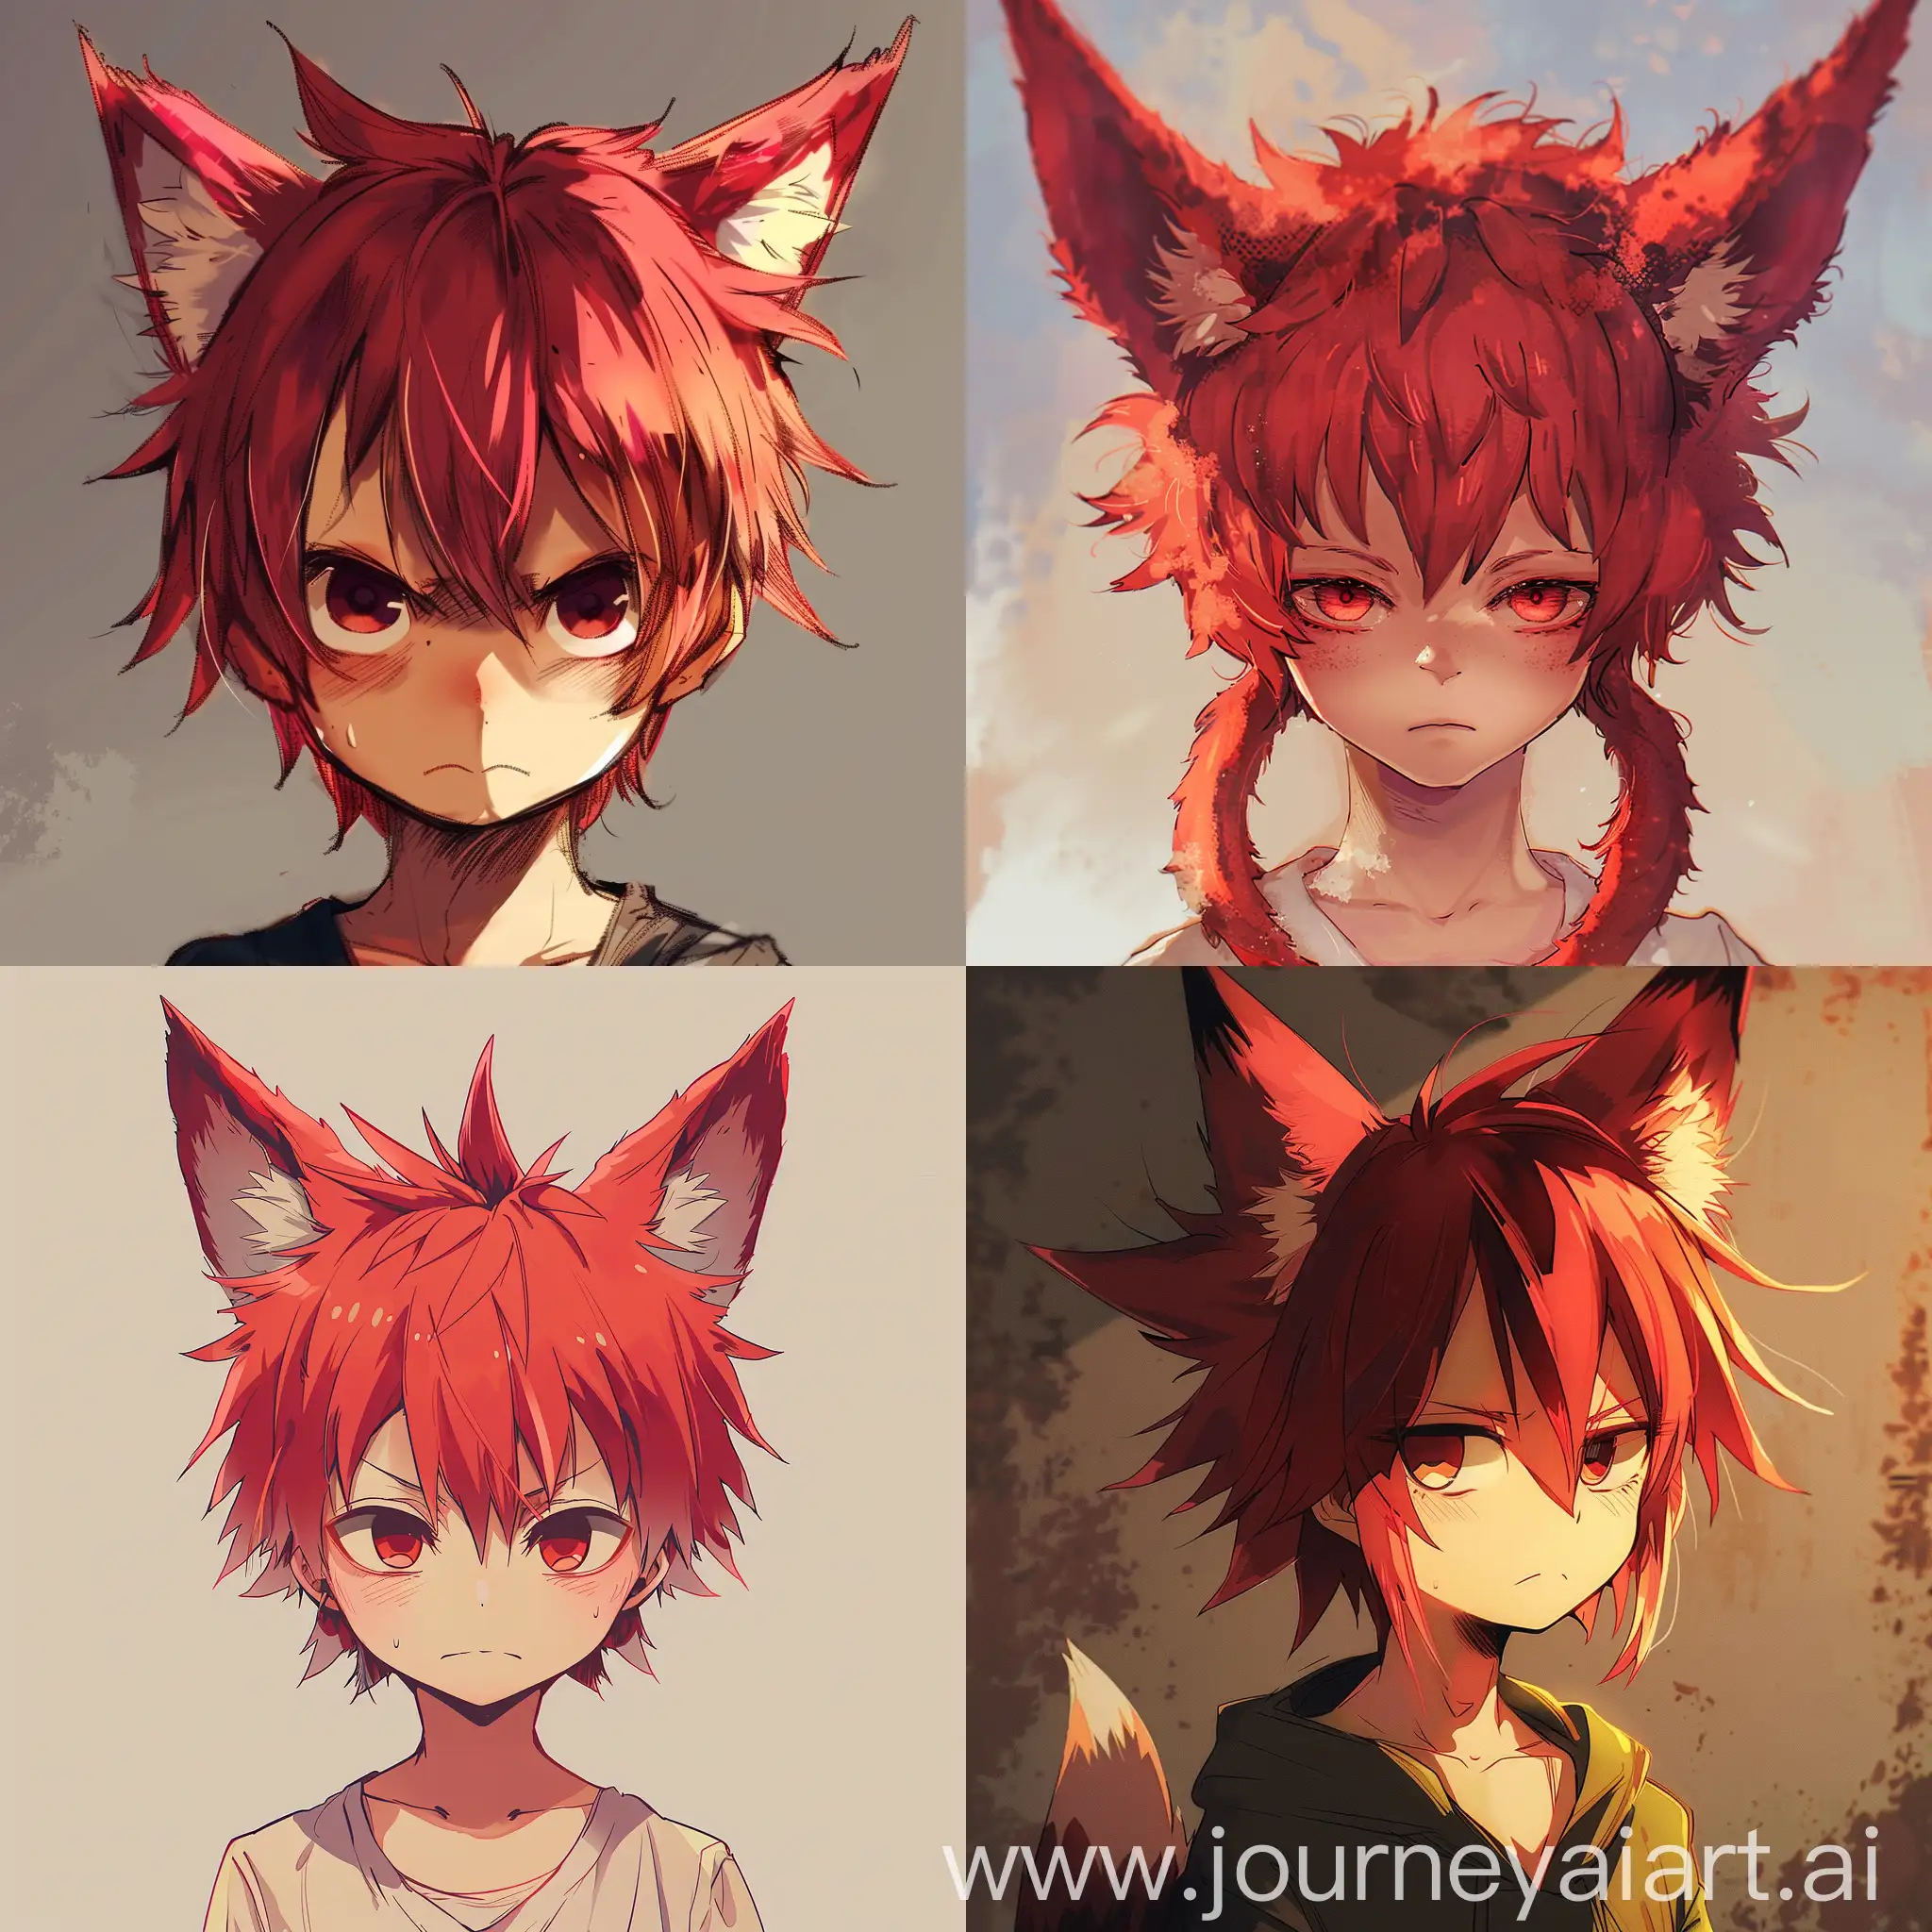 Anime, young boy, red hair, red nine tails, fox ears, grumpy looking, hd, high resolution, cute, blushy, short hair.